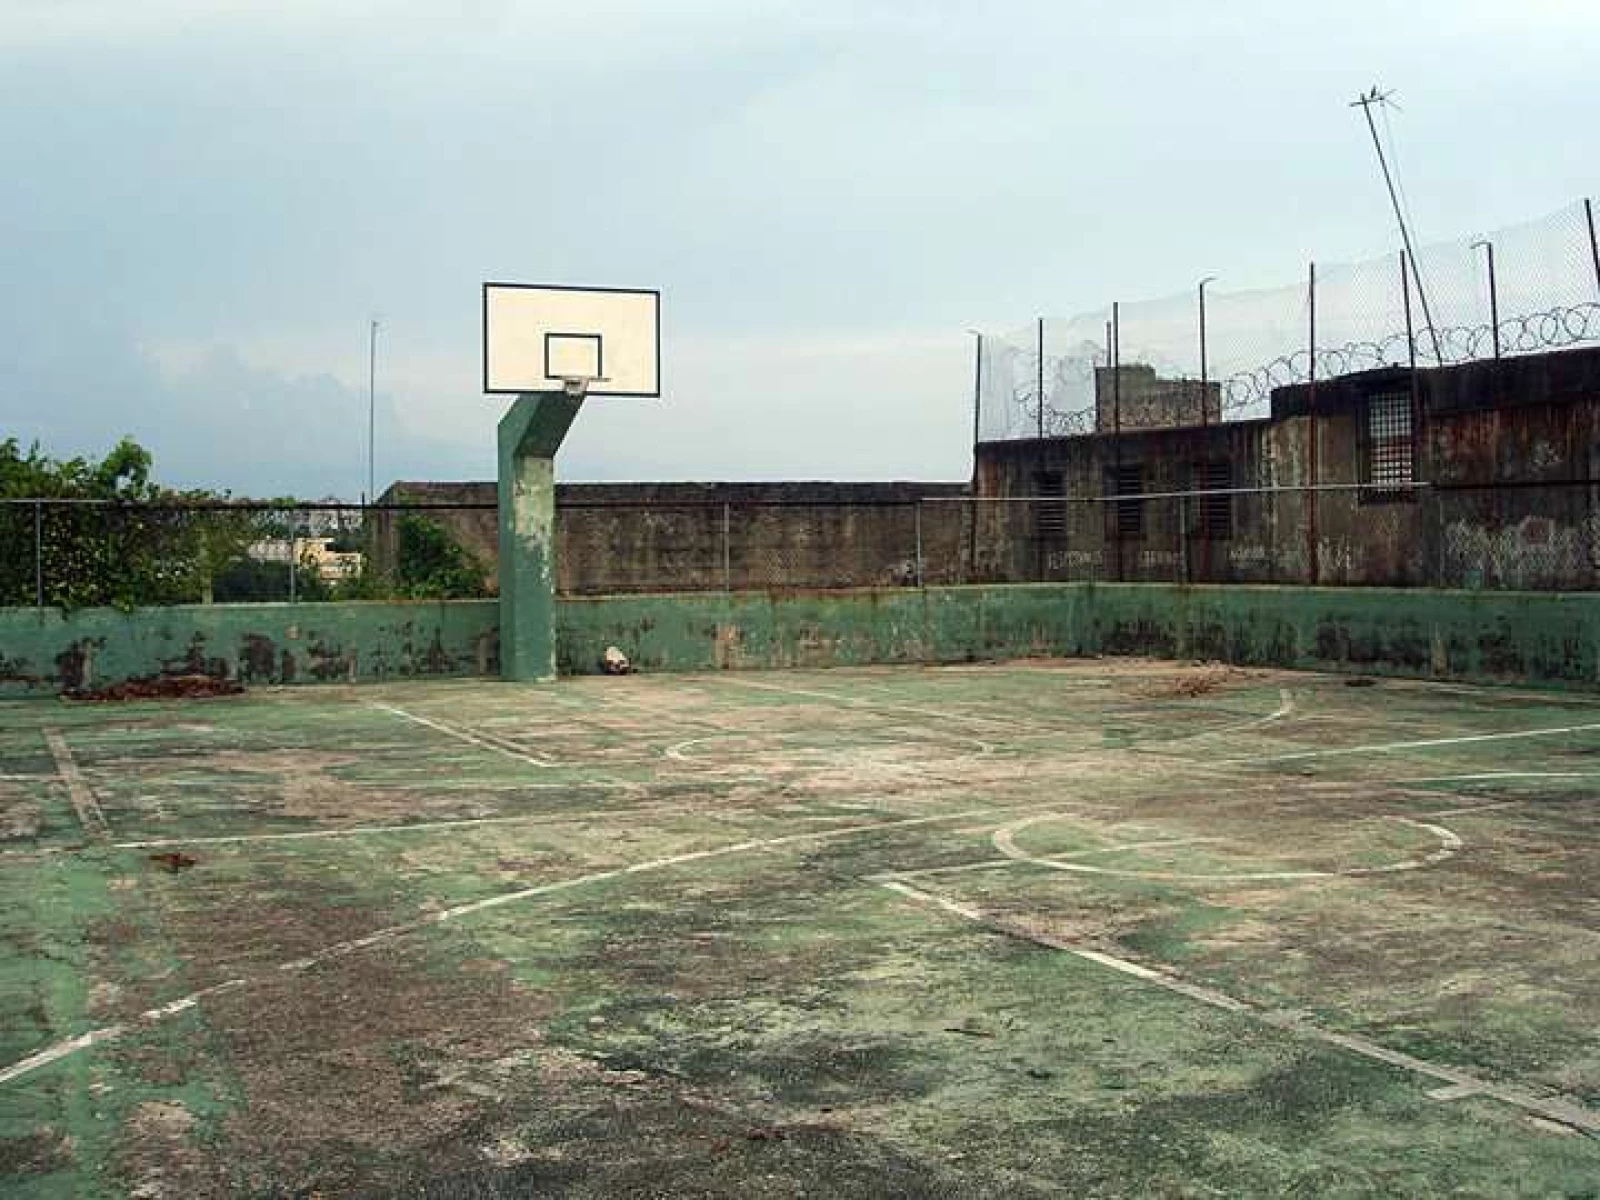 Santo Domingo Basketball Court: Santa Barbara Playground Courts of